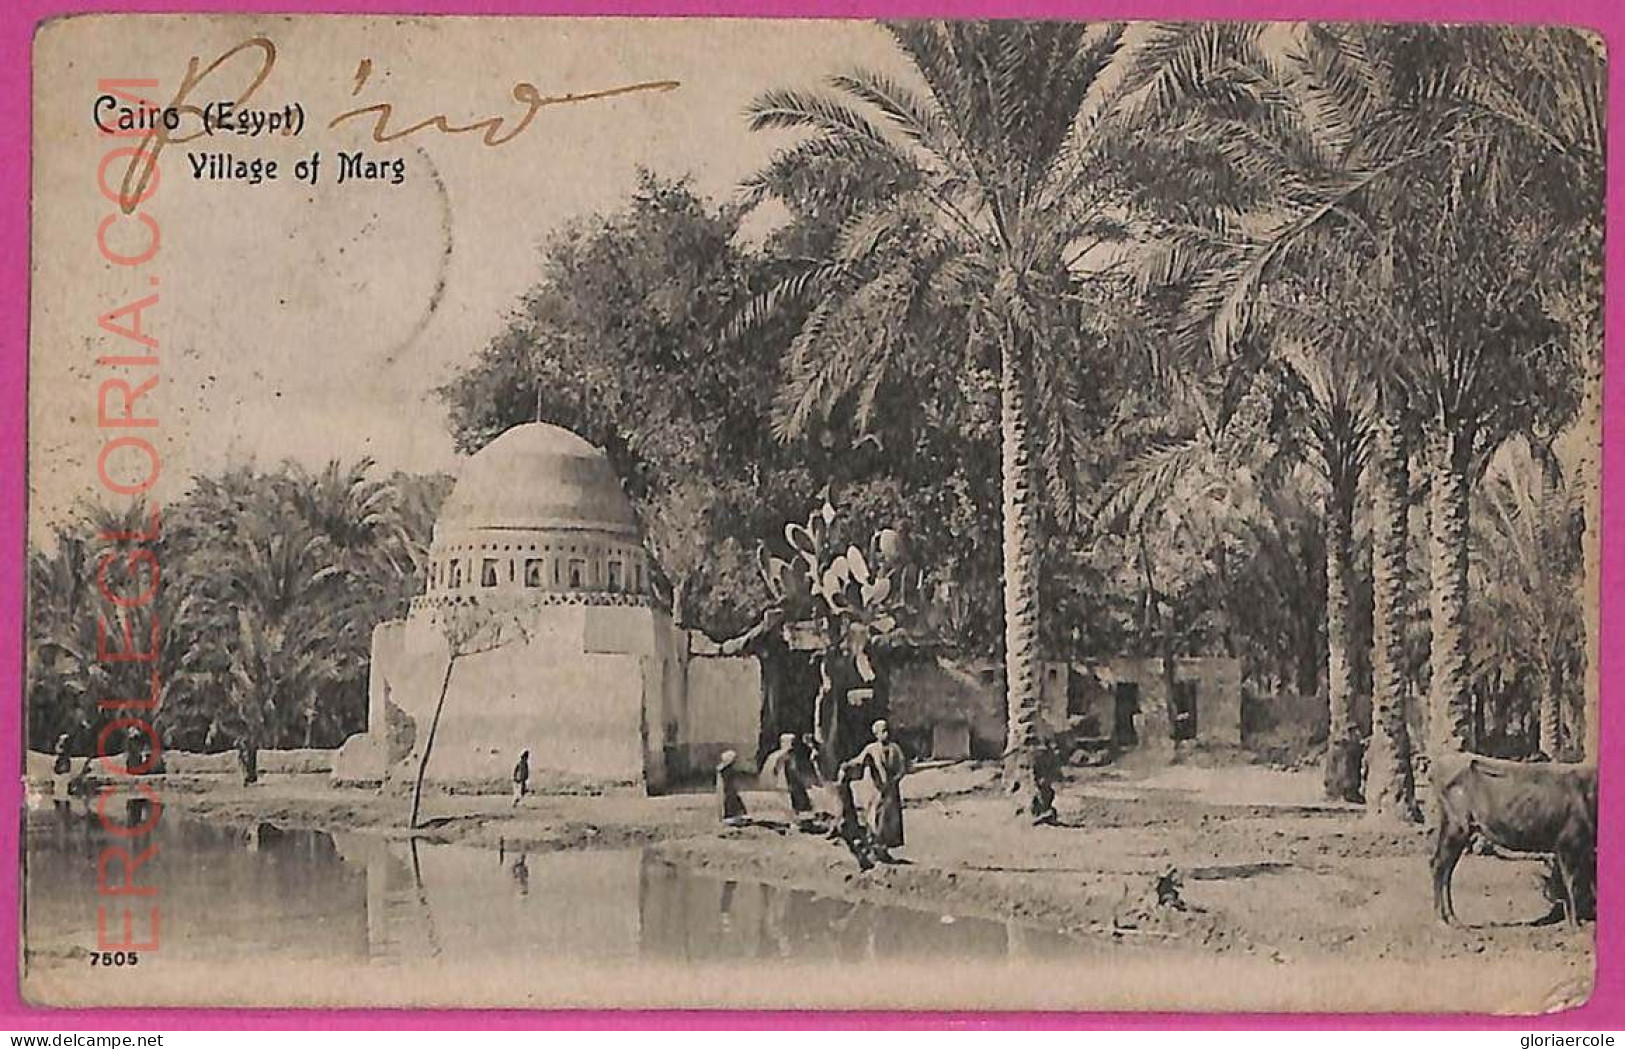 Ag3031 - EGYPT - VINTAGE POSTCARD - Cairo - 1905 - El Cairo